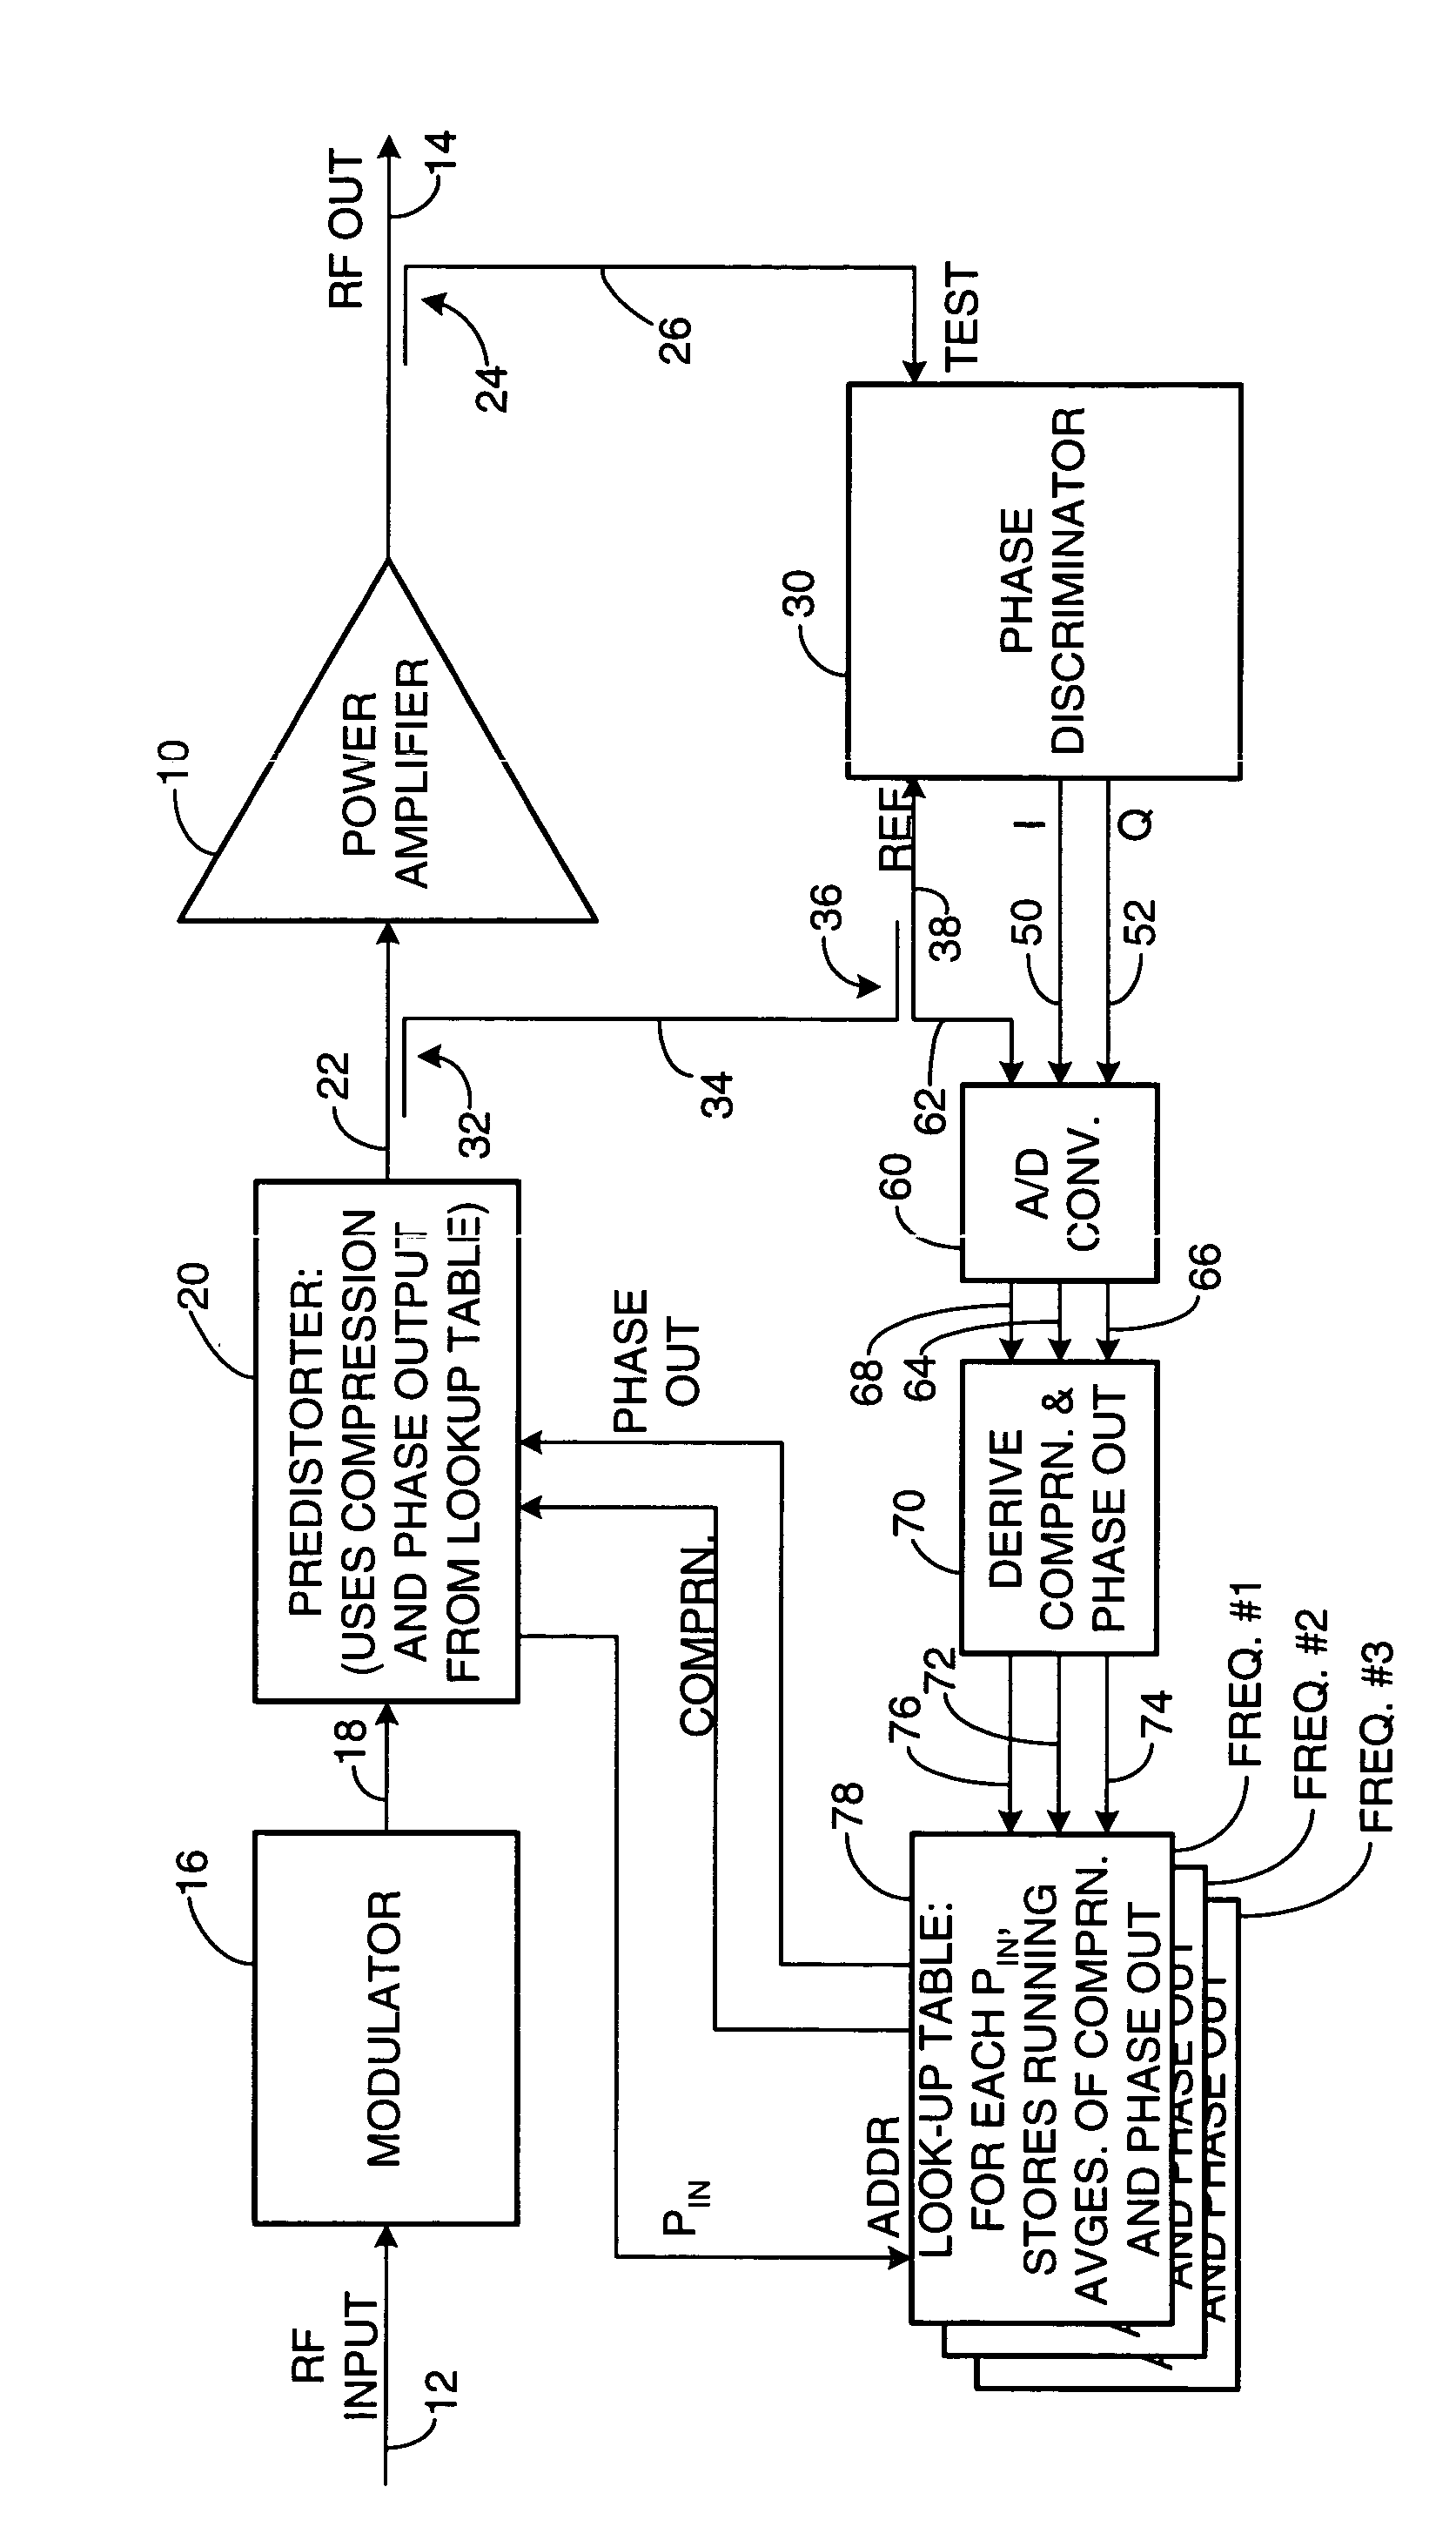 Digital predistortion for power amplifier